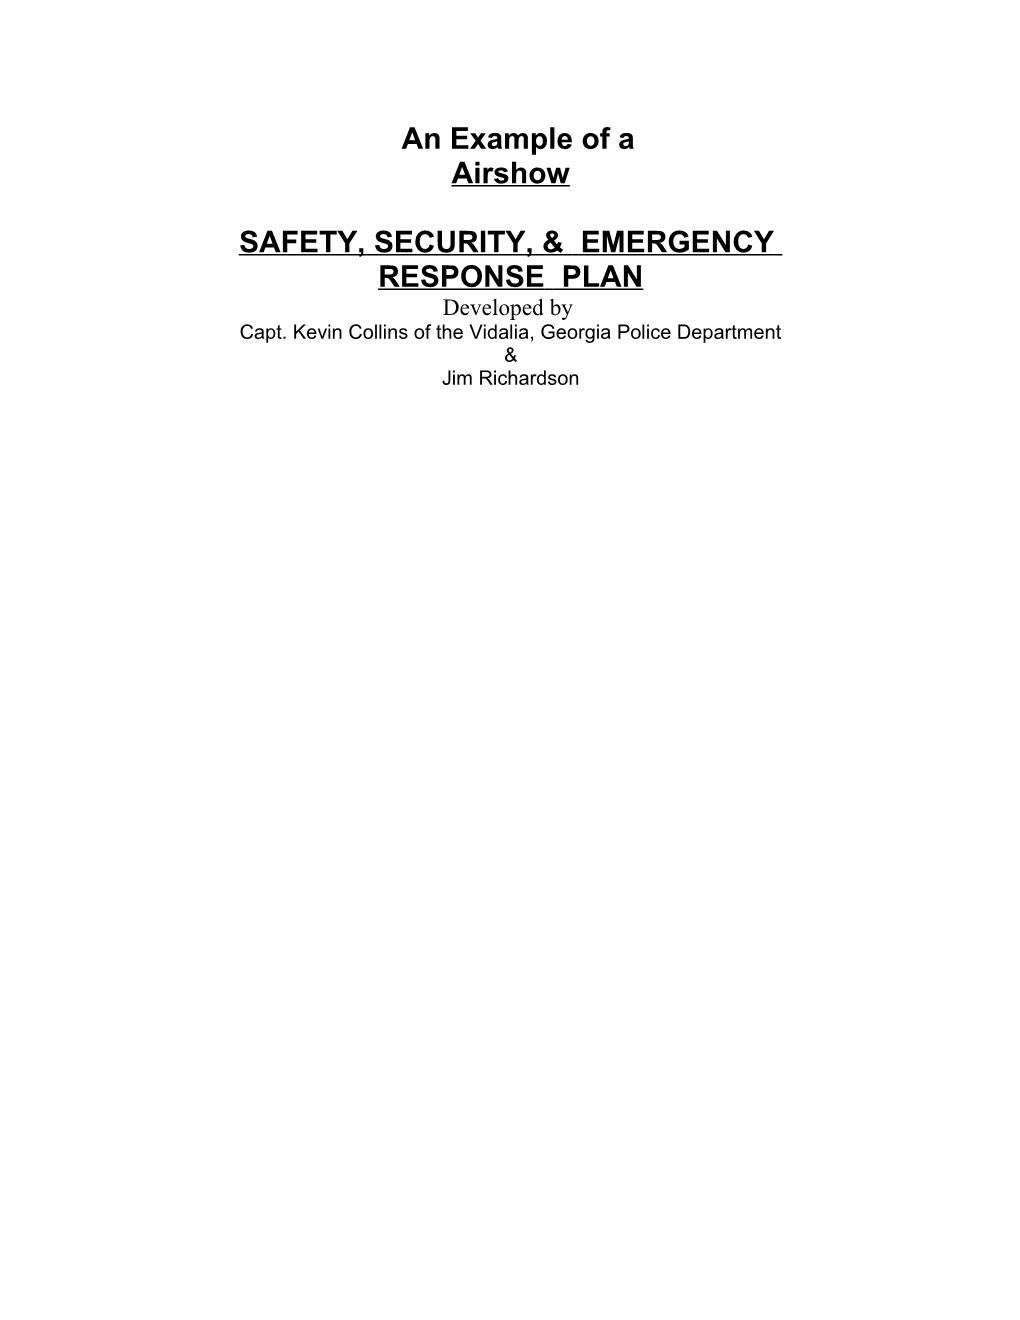 Safety, Security, & Emergency Response Plan